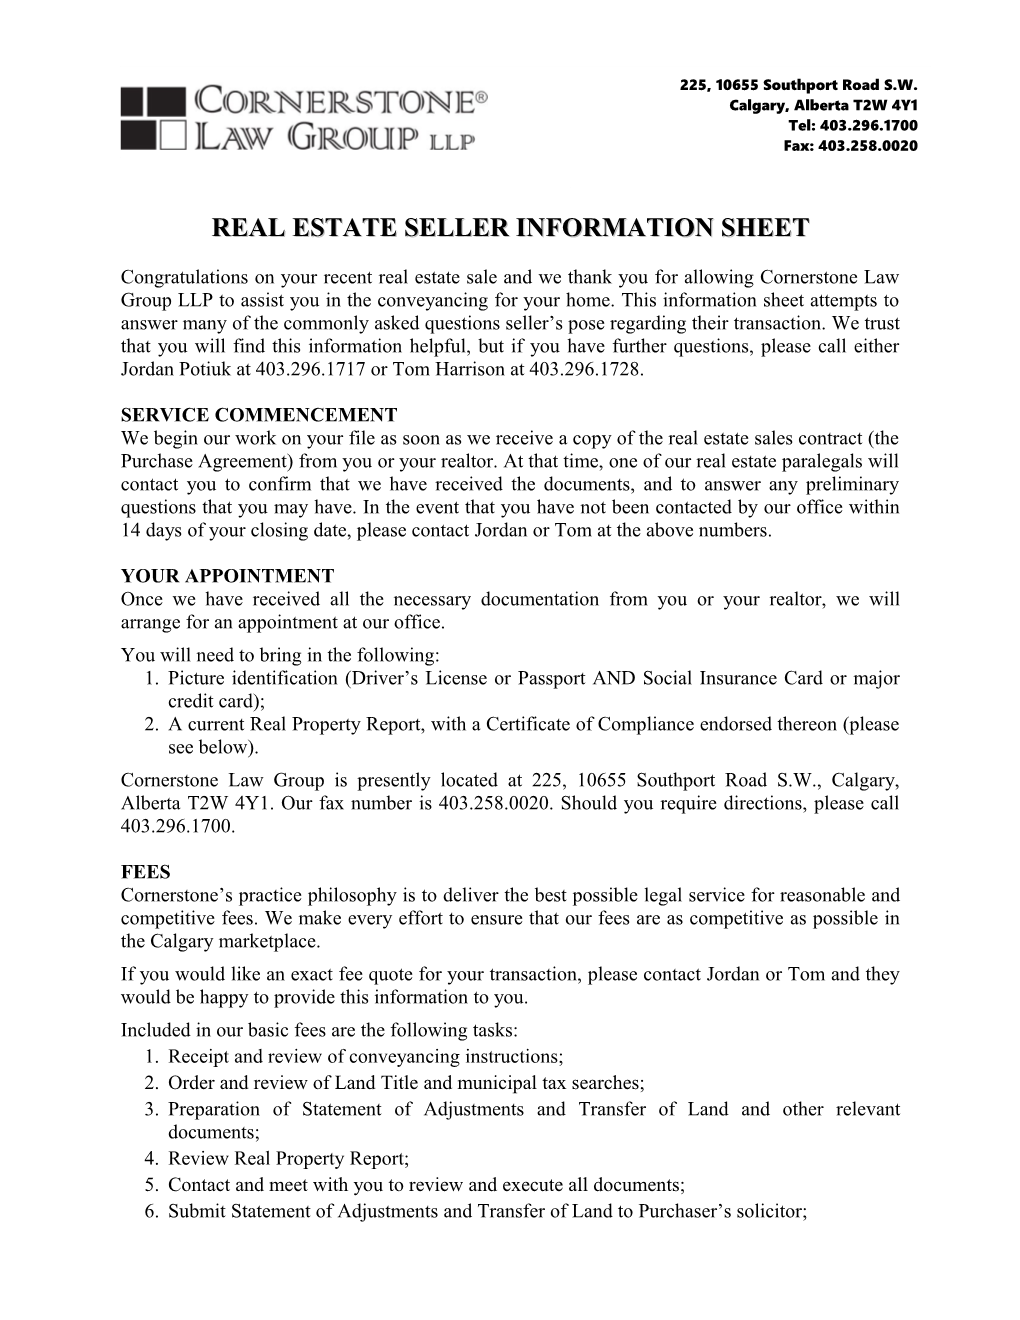 Real Estate Sellers Information Sheet